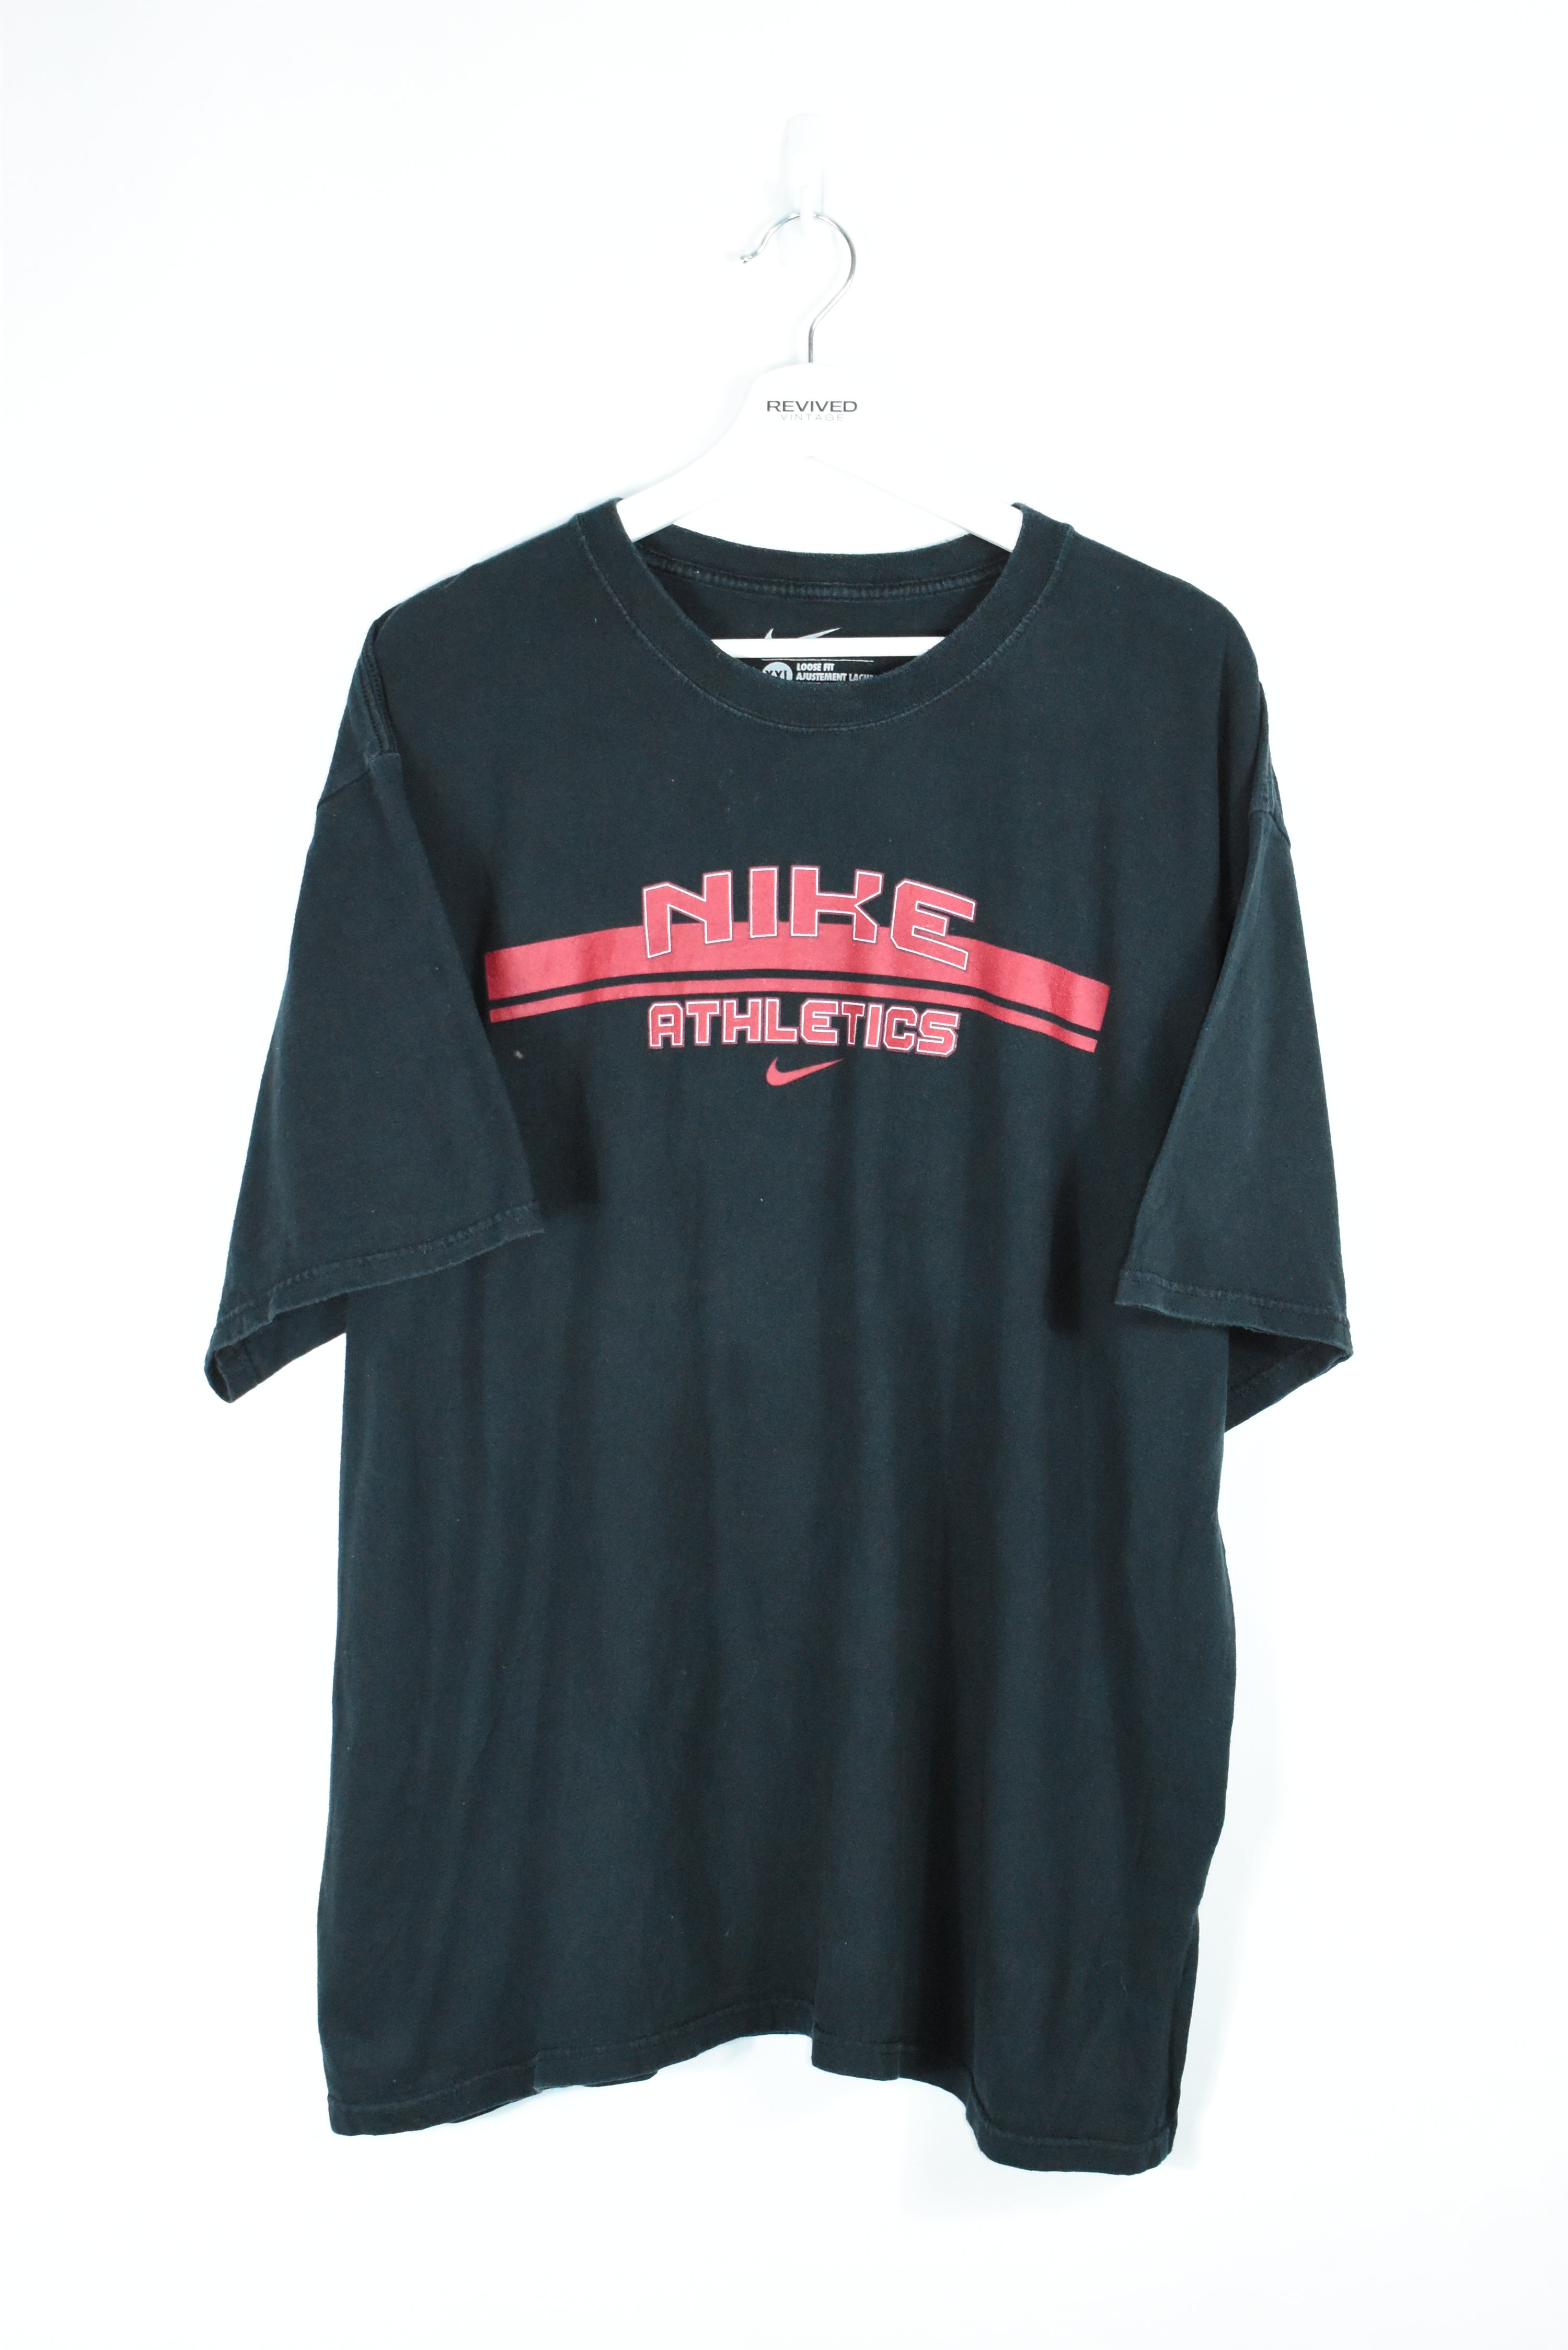 Vintage Nike Athletics T Shirt XXL